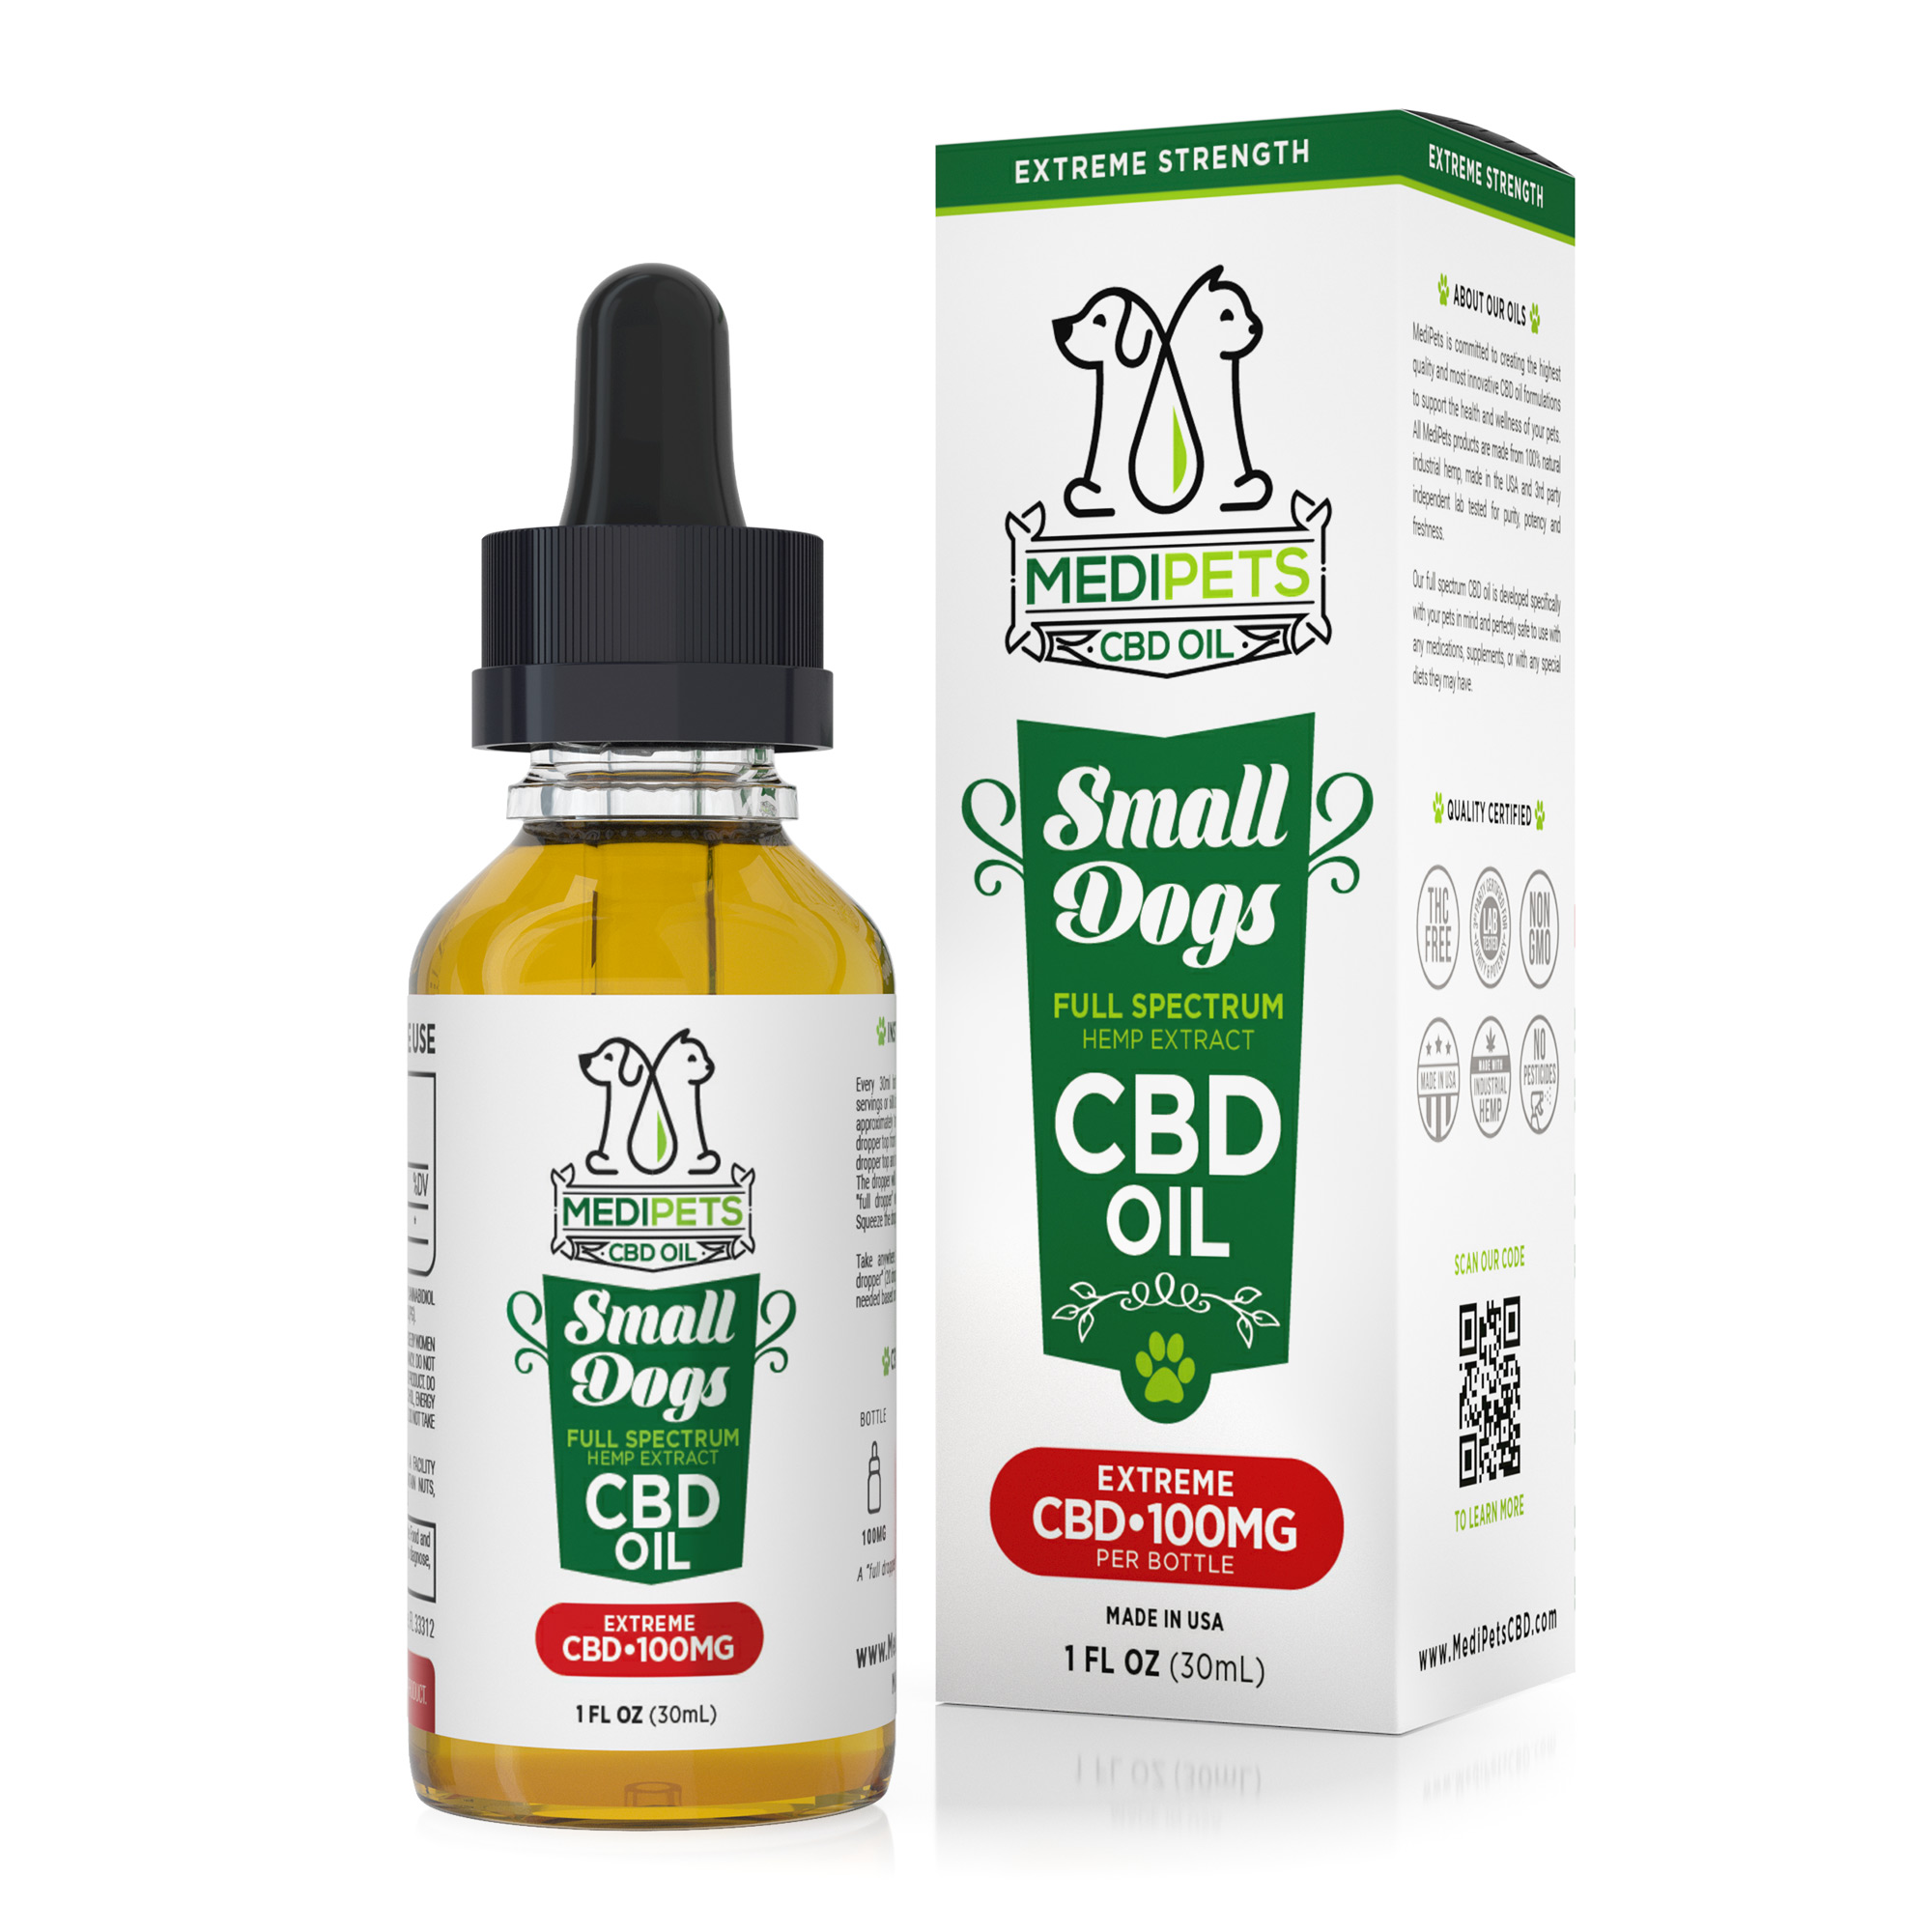 MediPets CBD Oil for Small Dogs - Extreme Strength - 100mg (30ml) - Diamond CBD